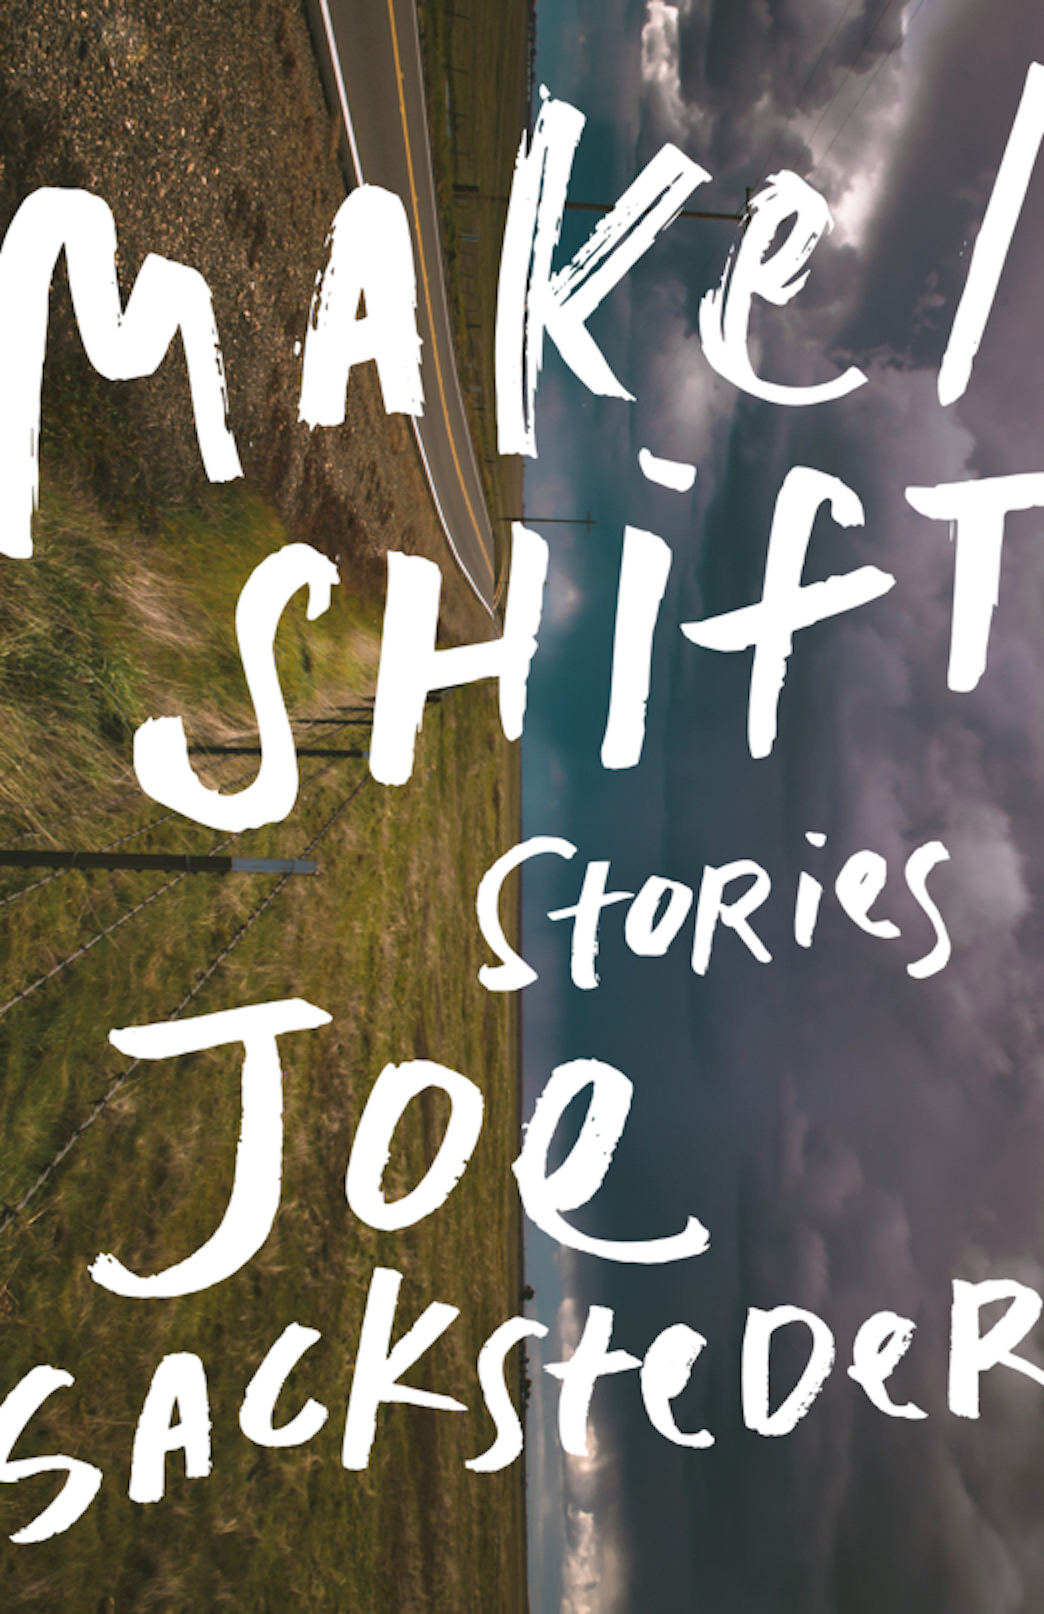 My debut story collection, "Make/Shift" (Sarabande Books)